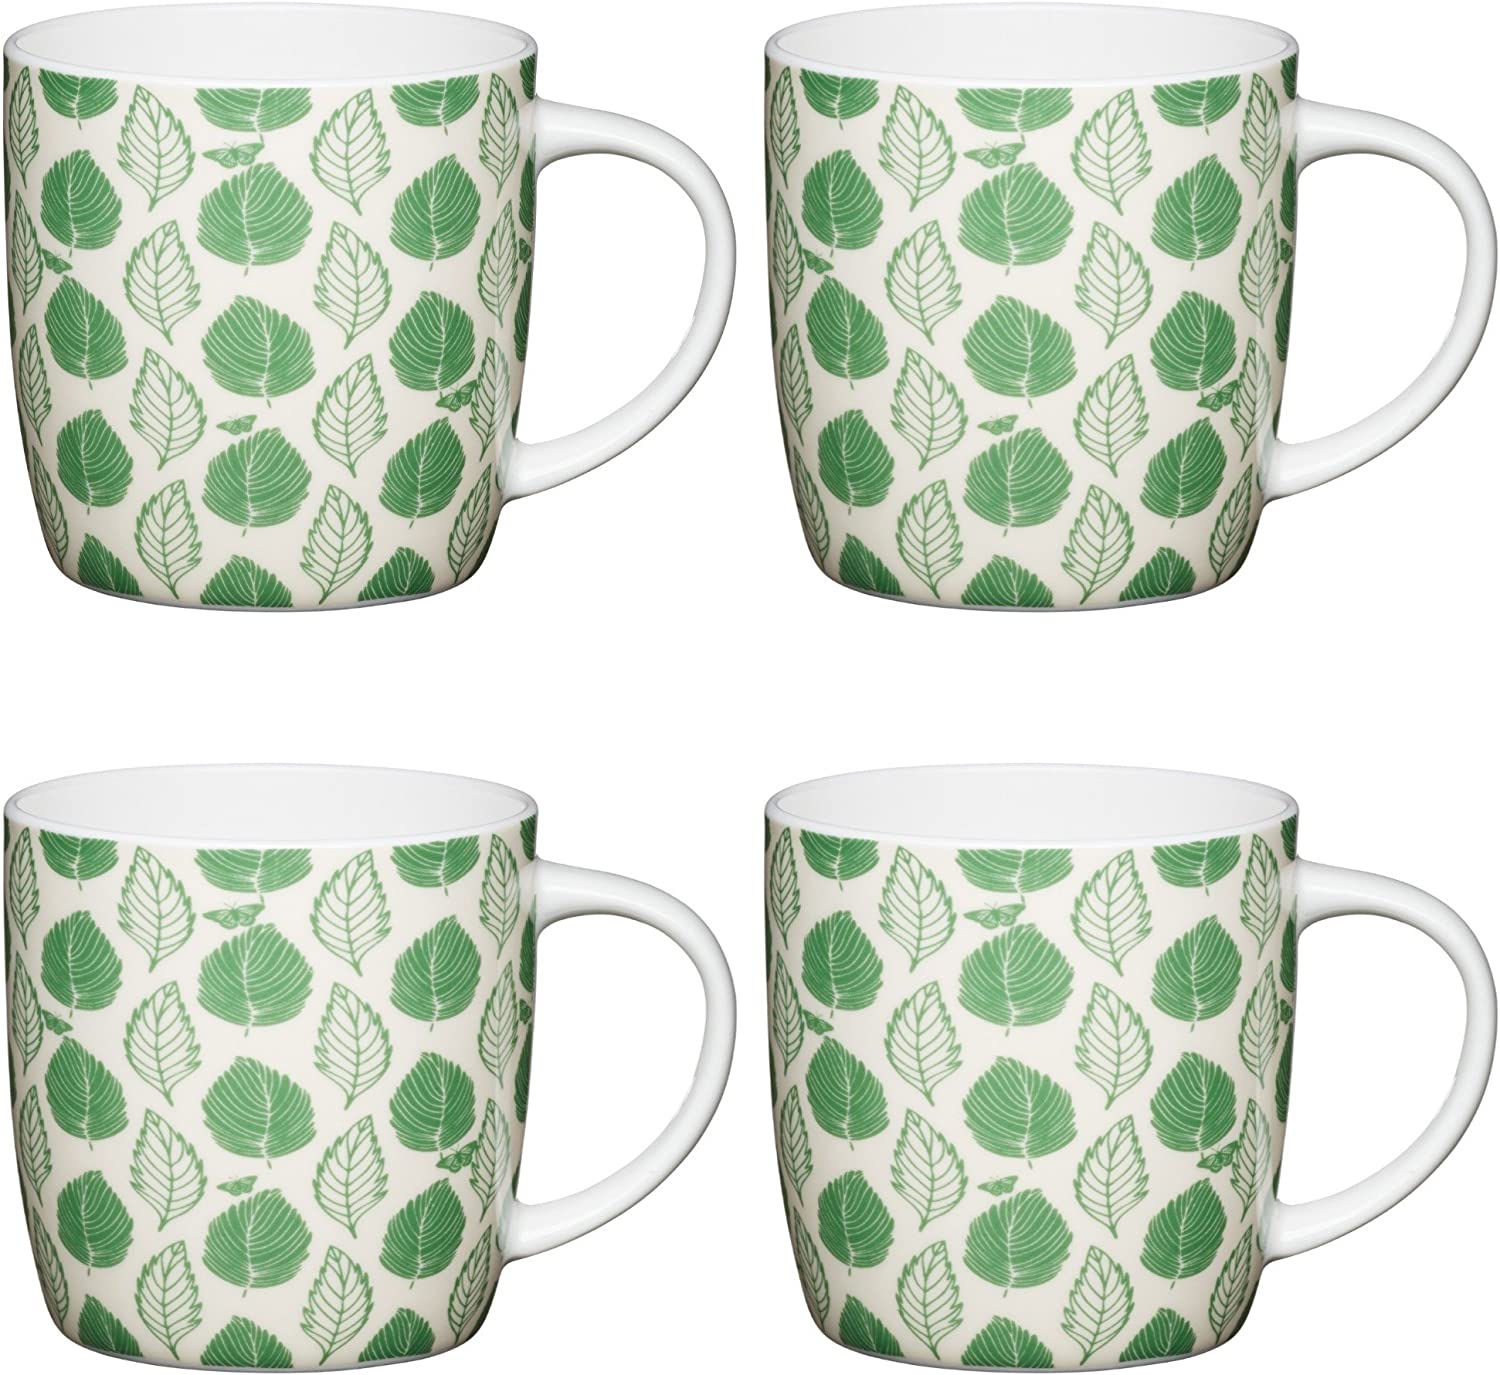 Kitchen Craft 425 ml Fine Leaf Nature Patterned Barrel Mugs (Set of 4) Green/White, Bone China, 8.9 x 12.4 x 9 cm, Green/White